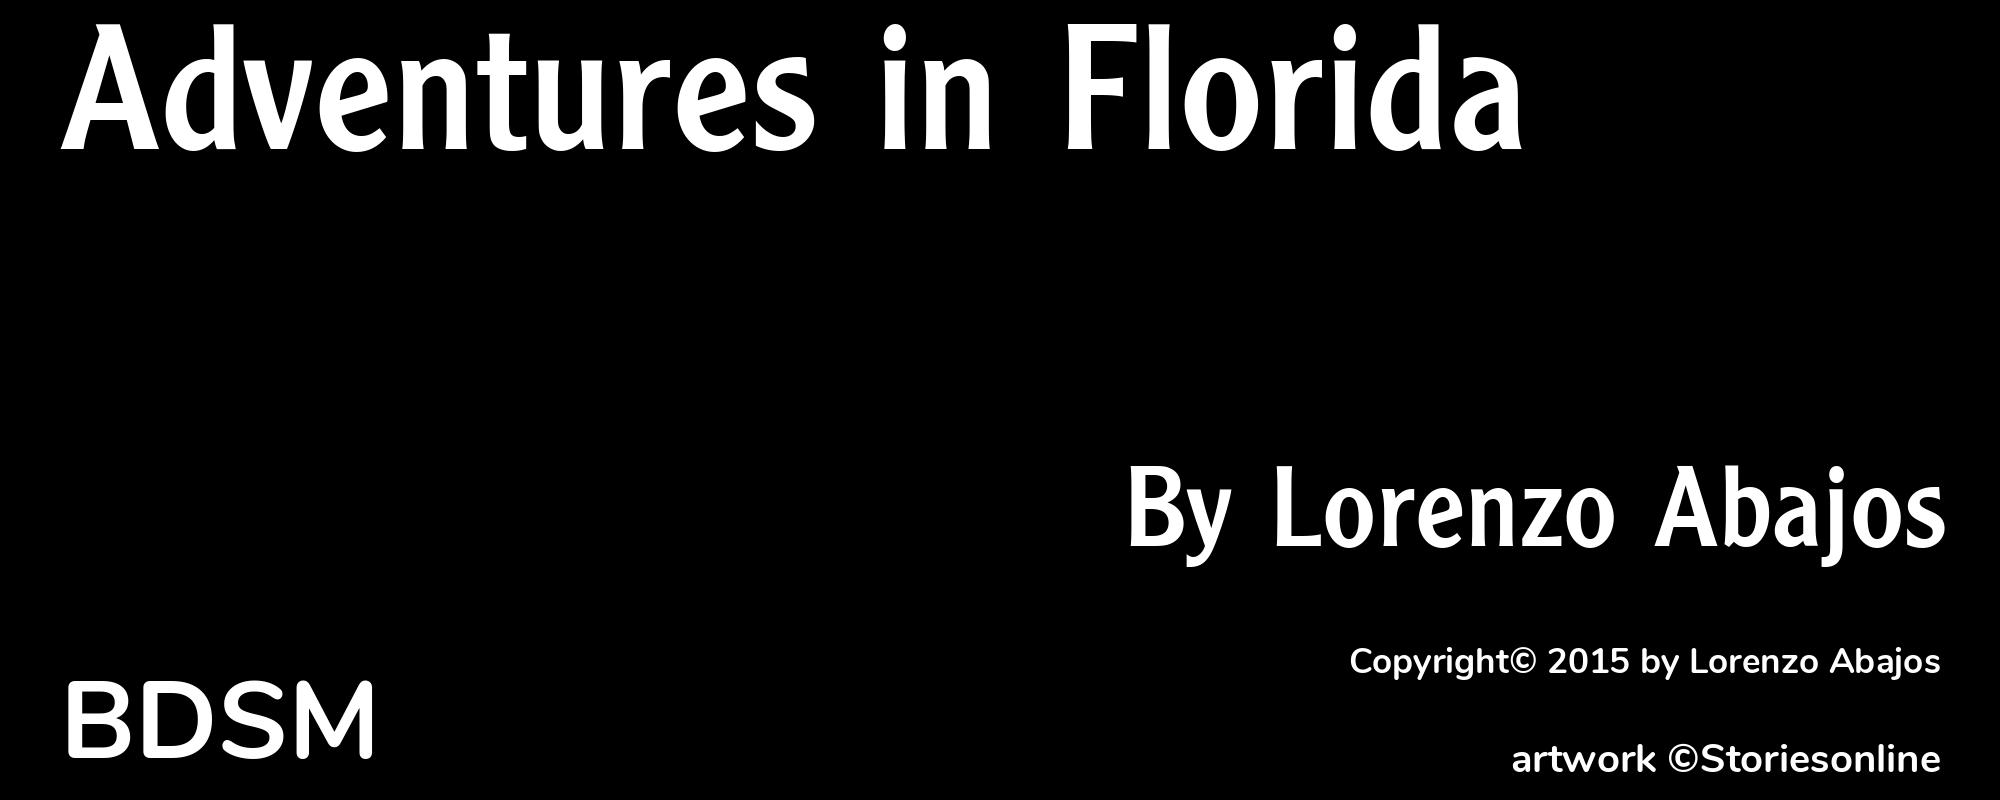 Adventures in Florida - Cover